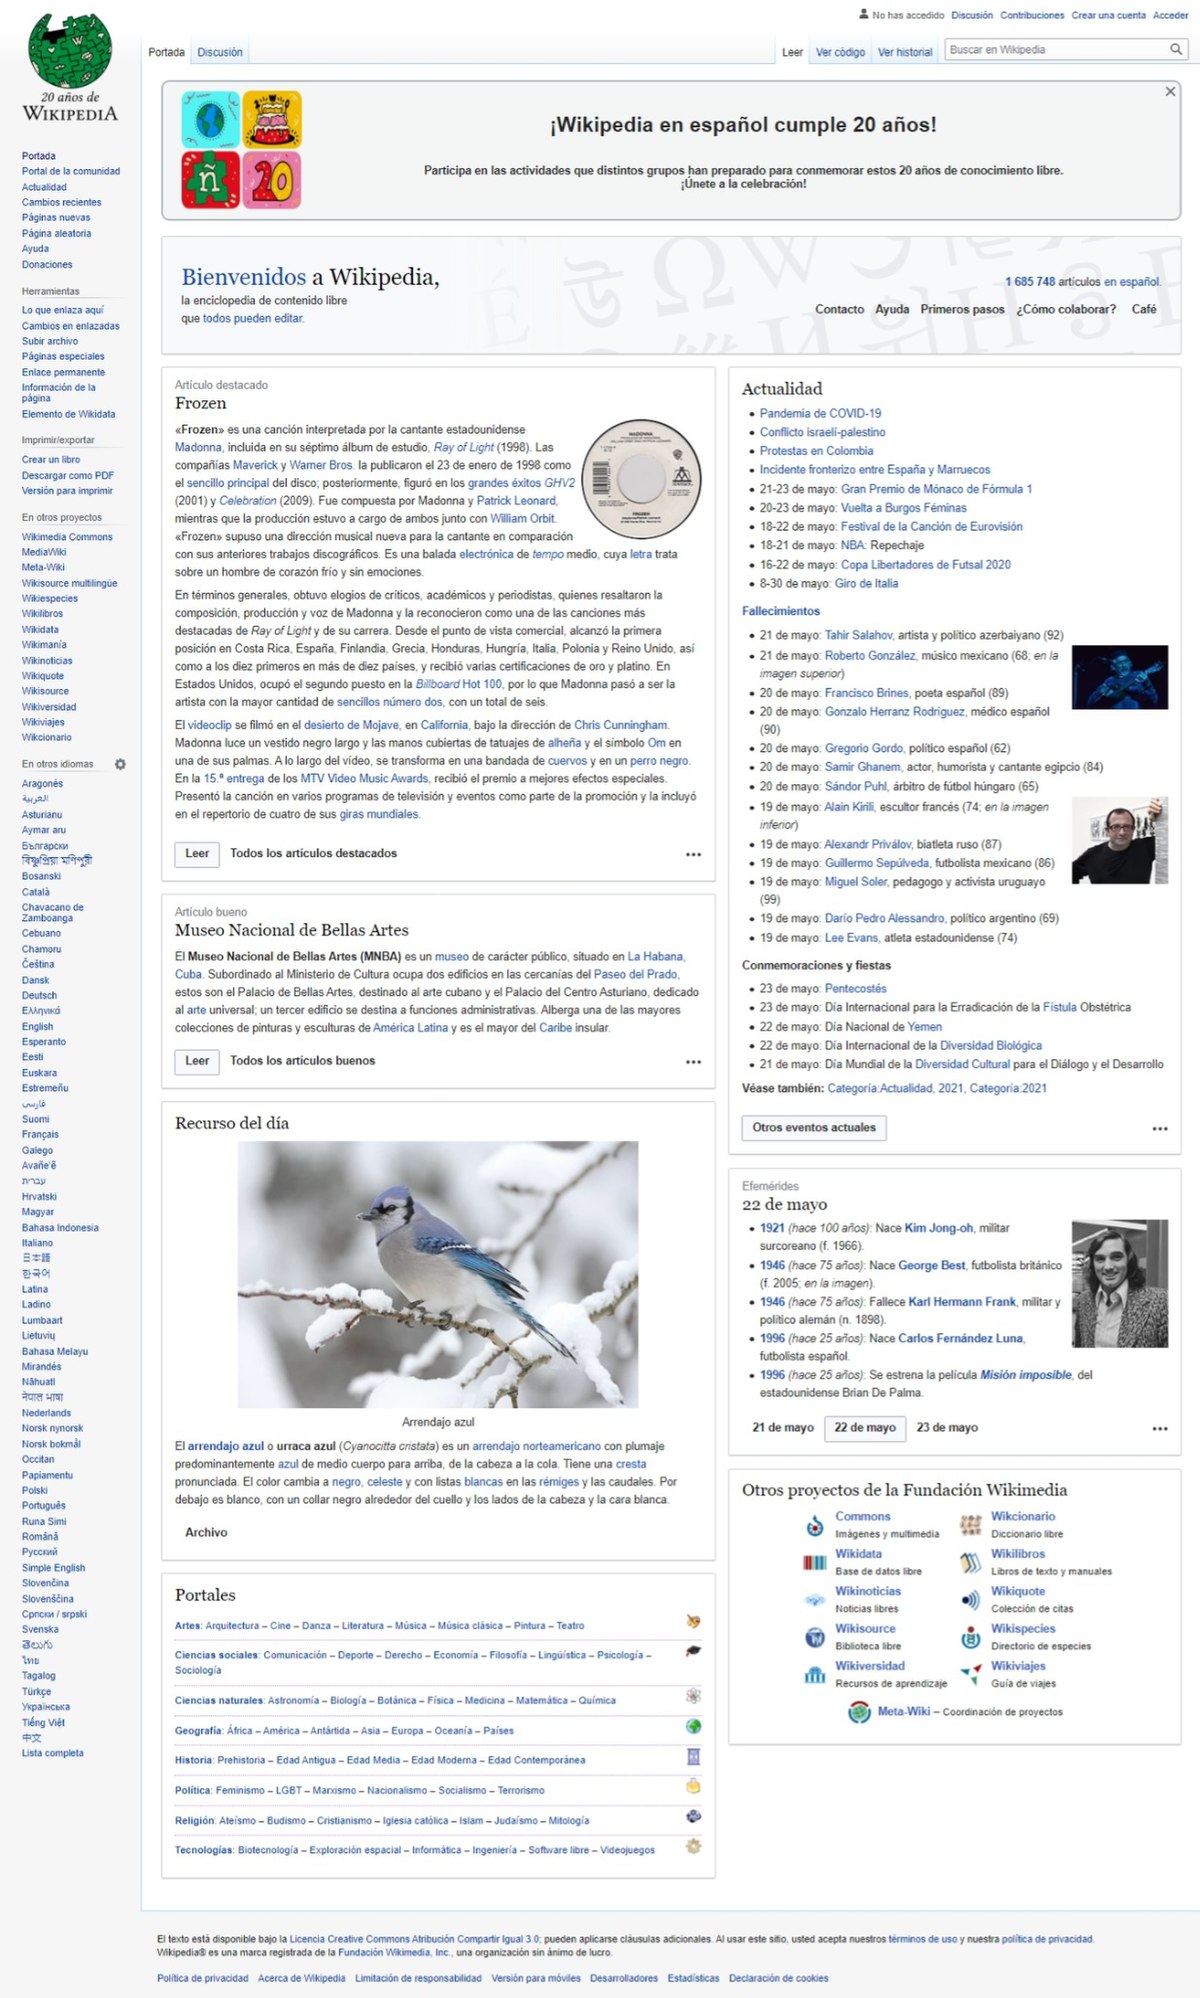 Archivo:Once mil metros por segundo.jpg - Wikipedia, la enciclopedia libre